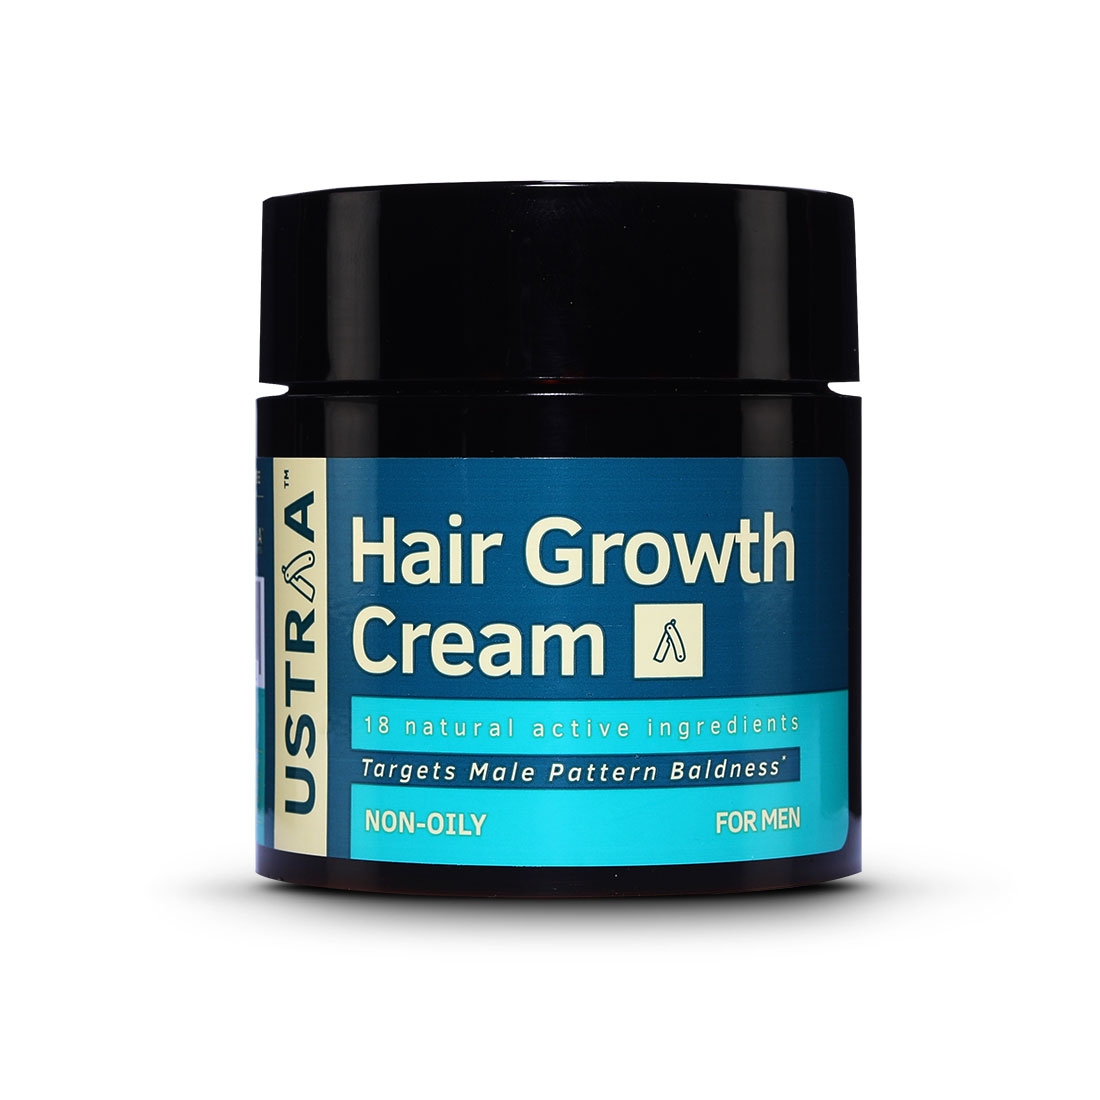 Ustraa | Ustraa Hair Growth Cream - 100g, Anti Hair Fall Shampoo - 250ml & Daily Use Conditioner - 100g 2